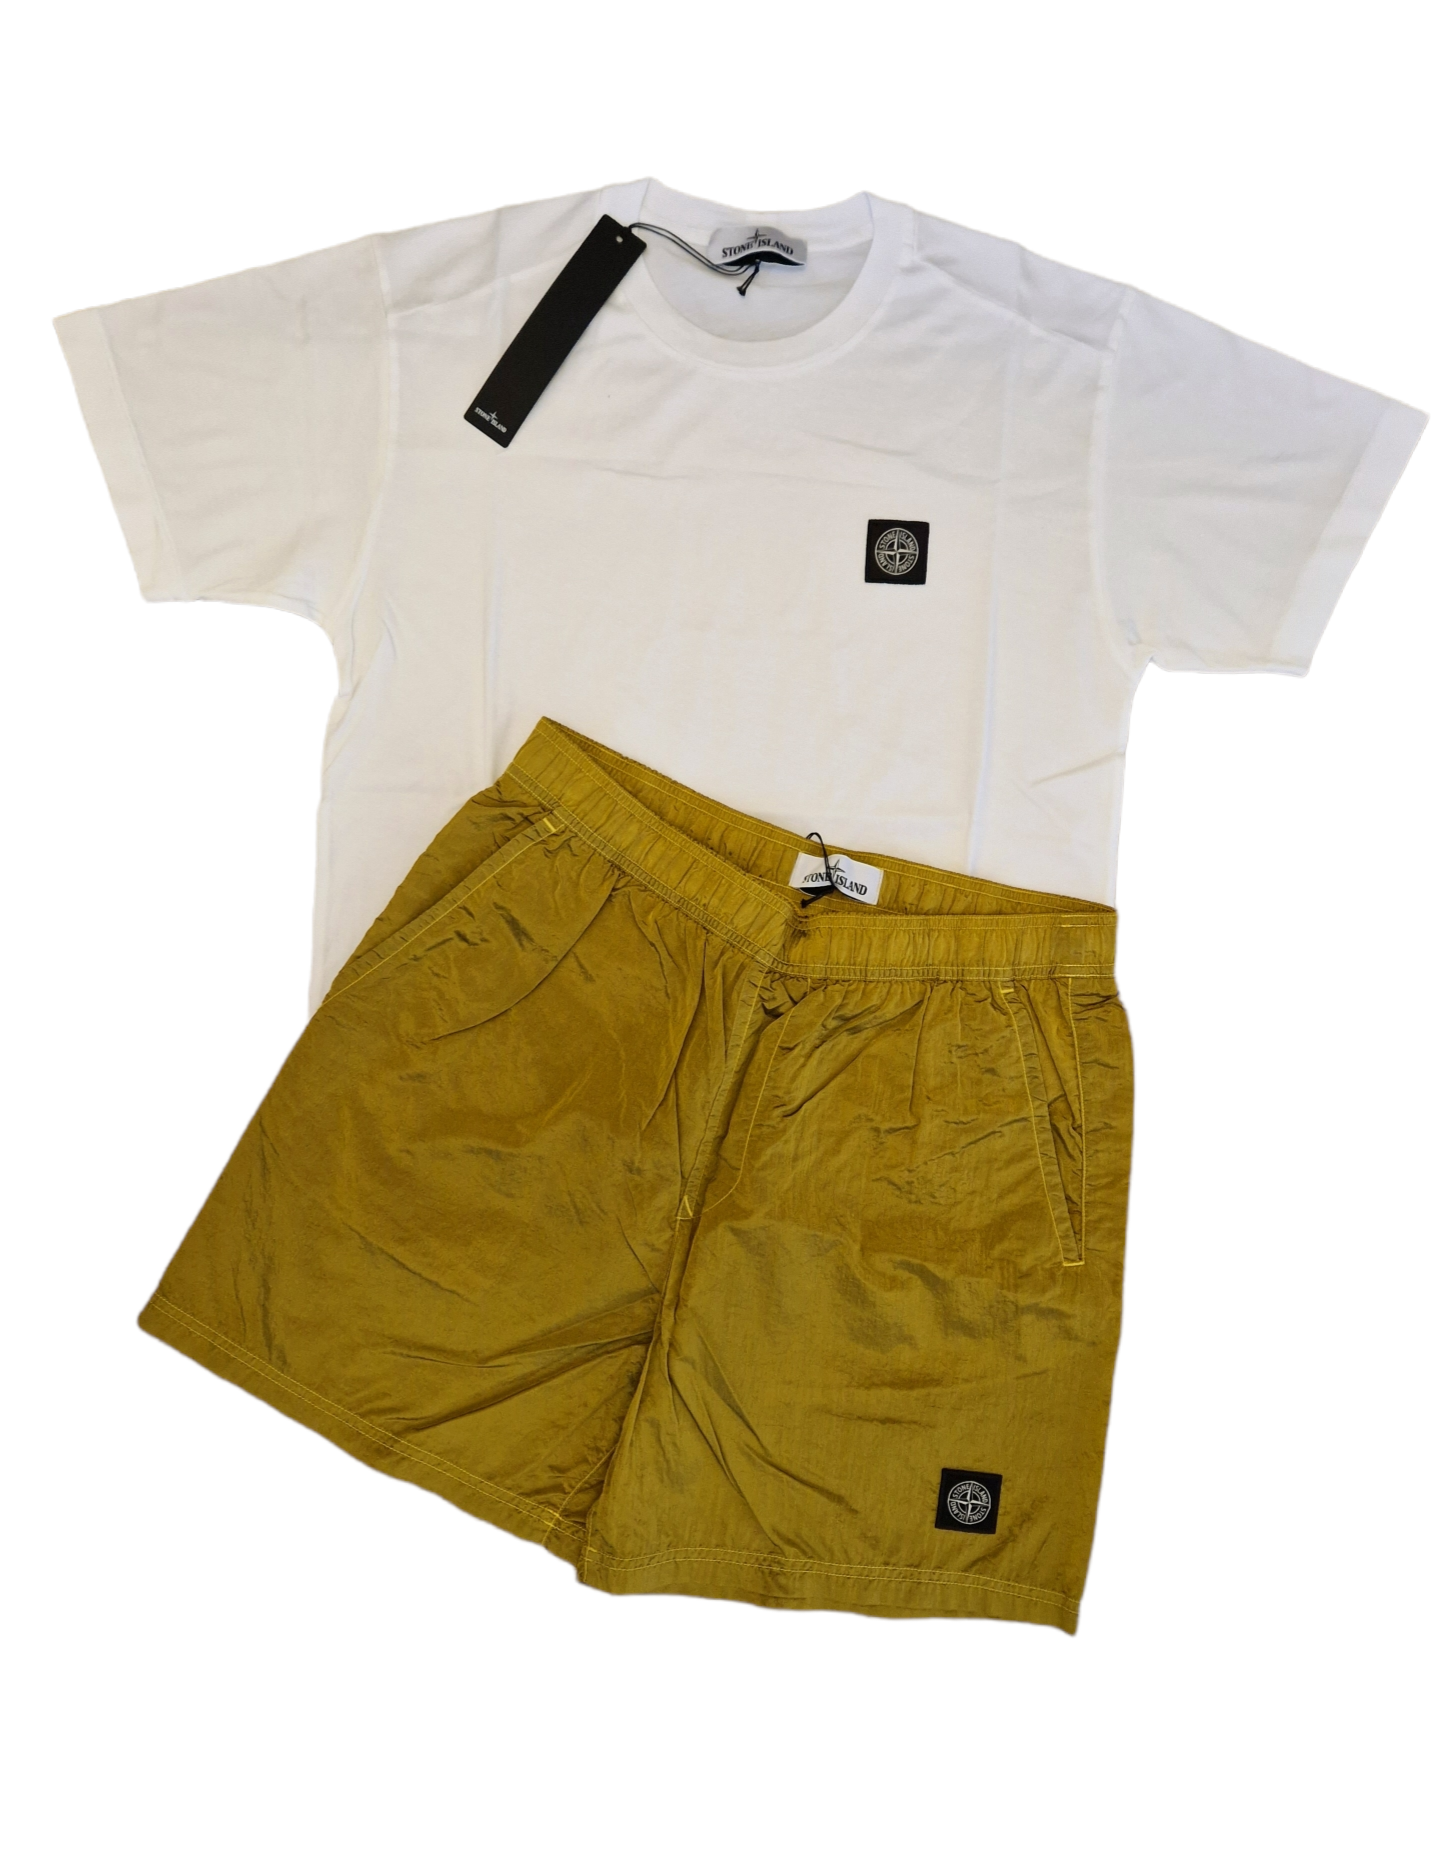 Stone Island Shorts Set White/Yellow